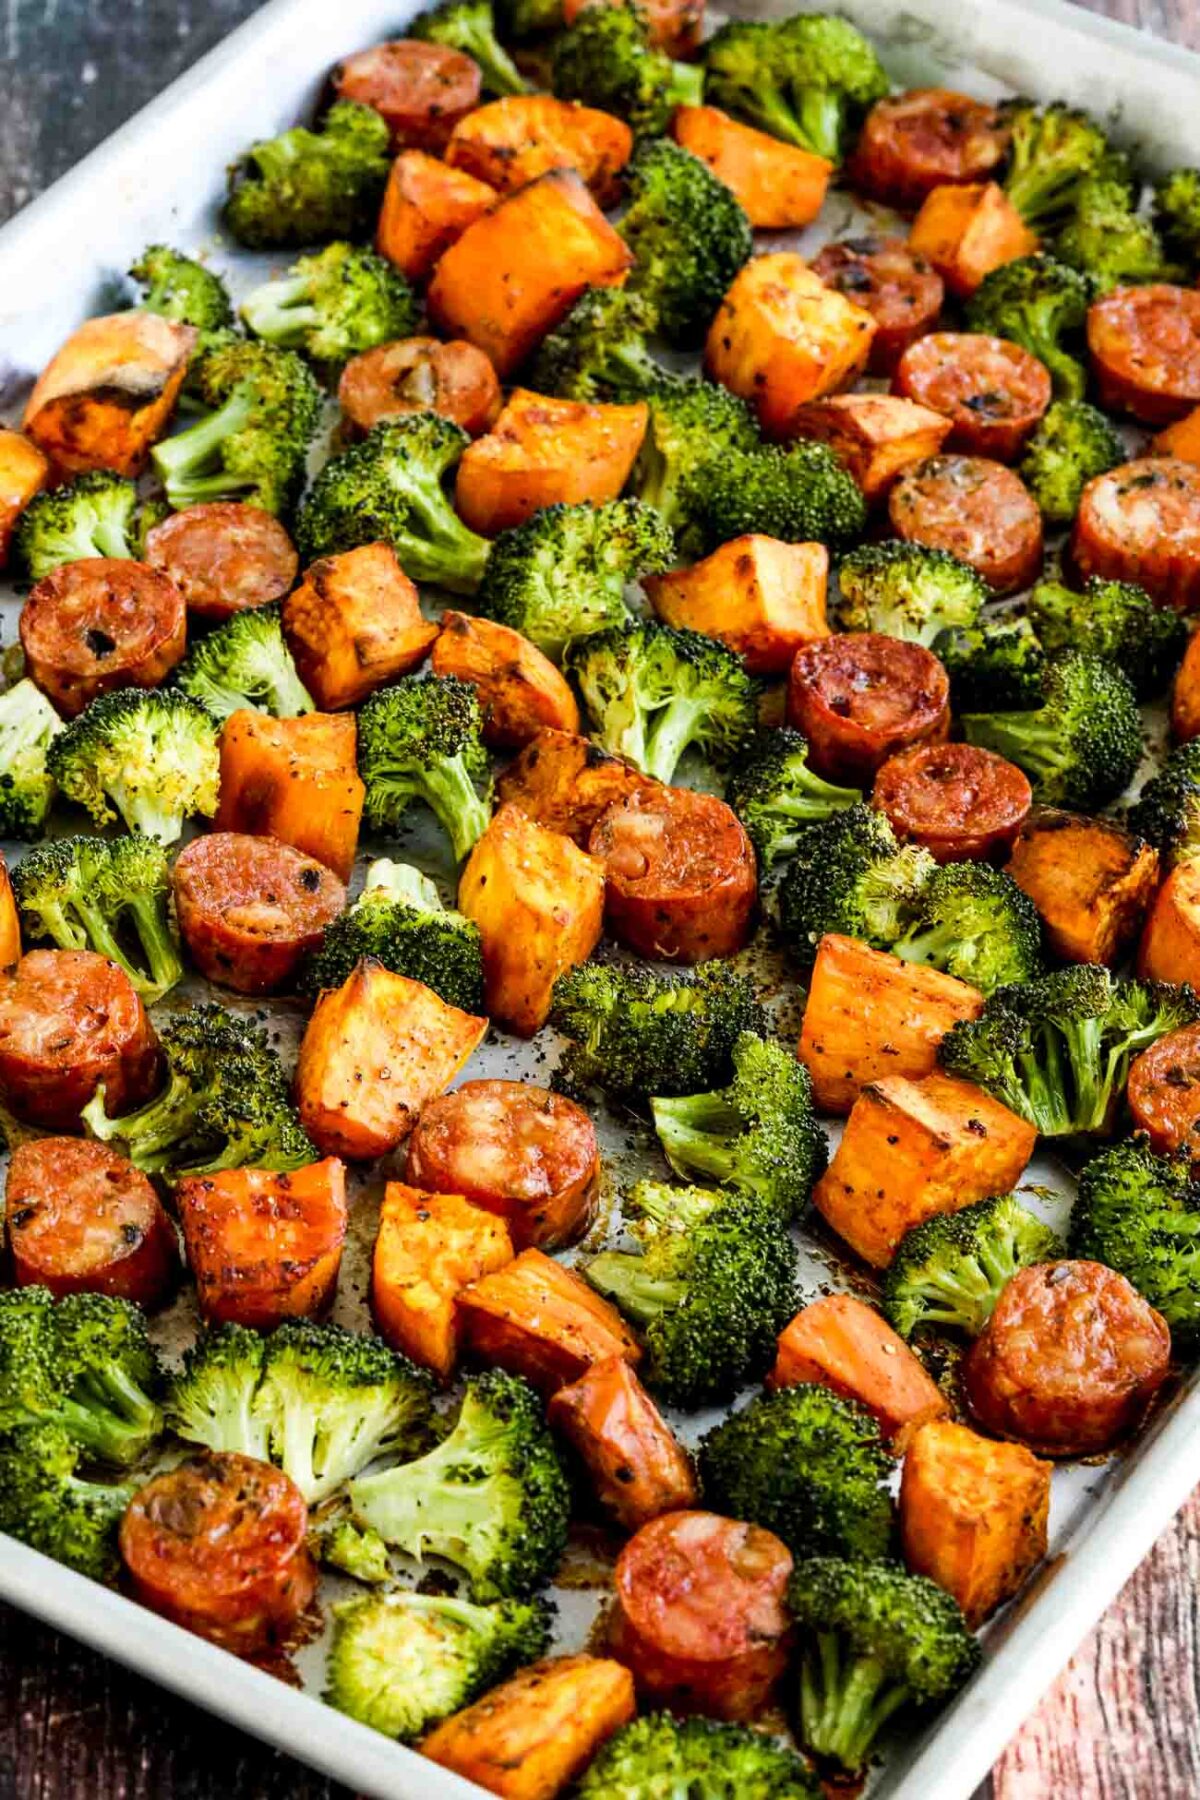 Roasted Sweet Potatoes, Sausage, and Broccoli Sheet Pan Meal shown on sheet pan after roasting